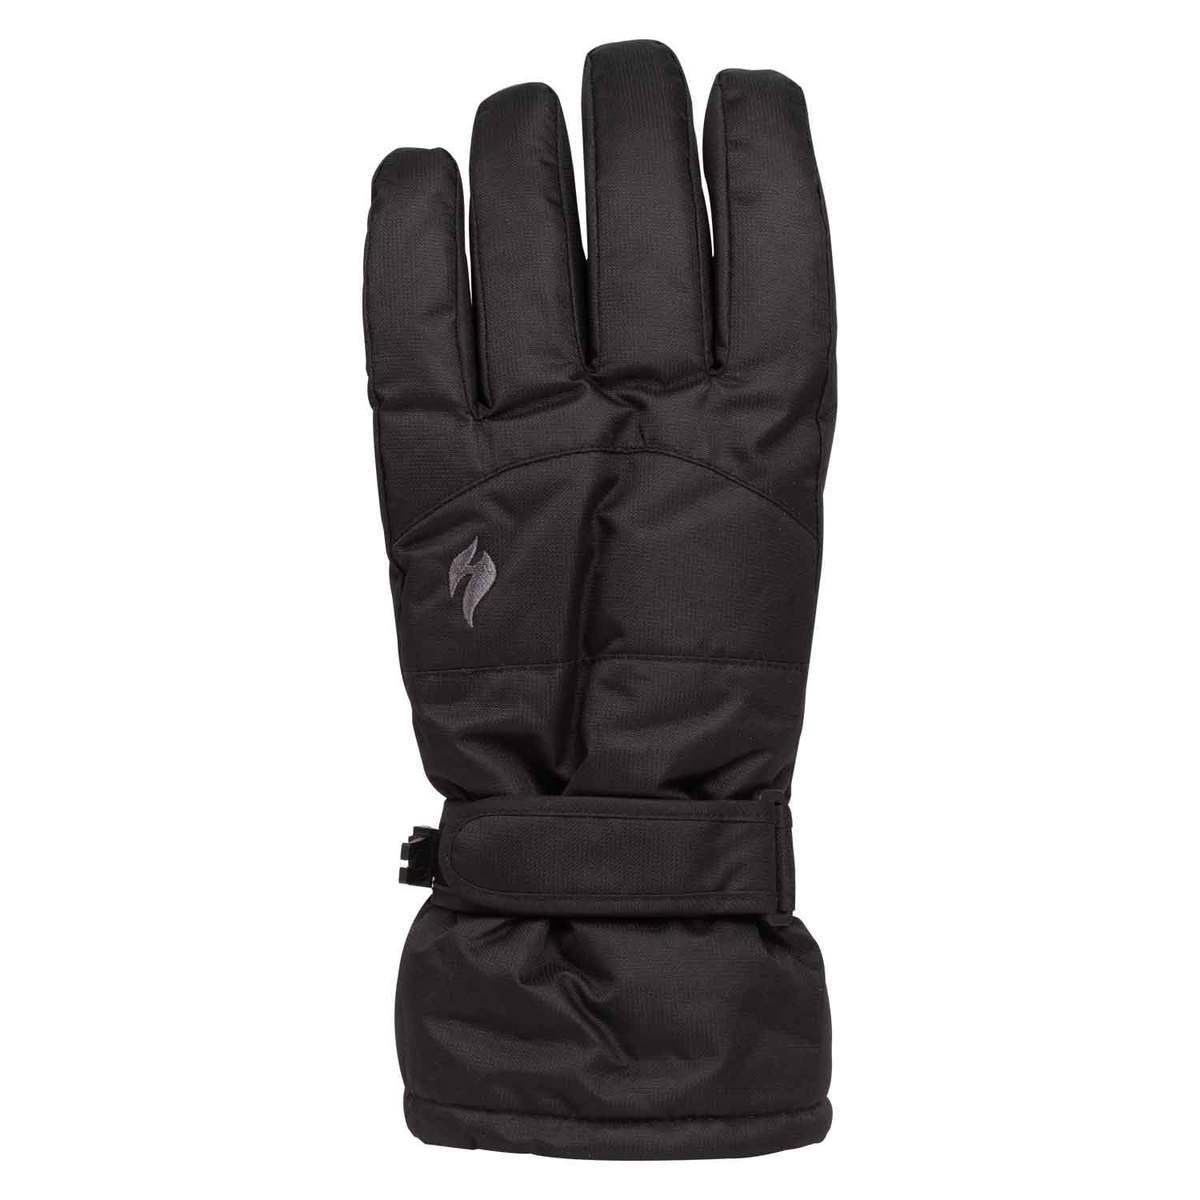 Performance Winter Glove